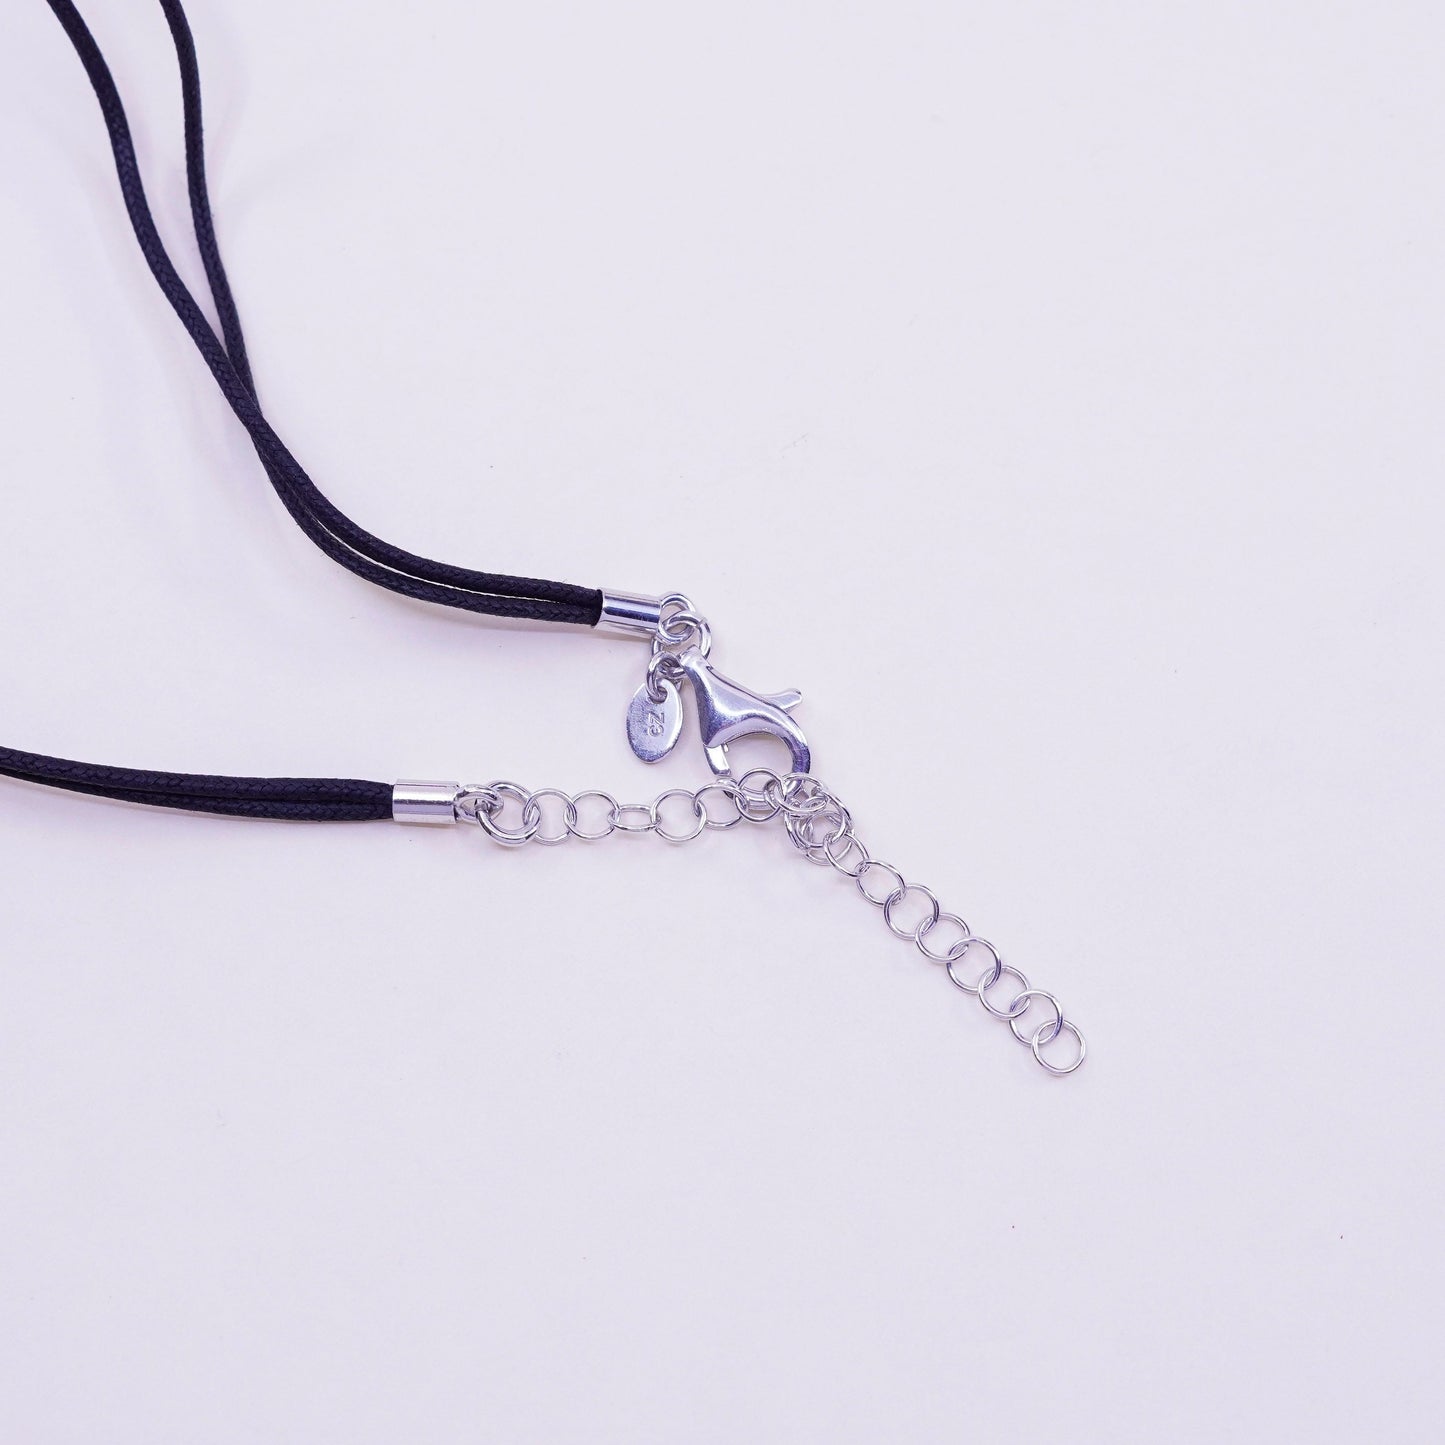 12+2”, Milor sterling 925 silver necklace choker collar linen core bar pendant